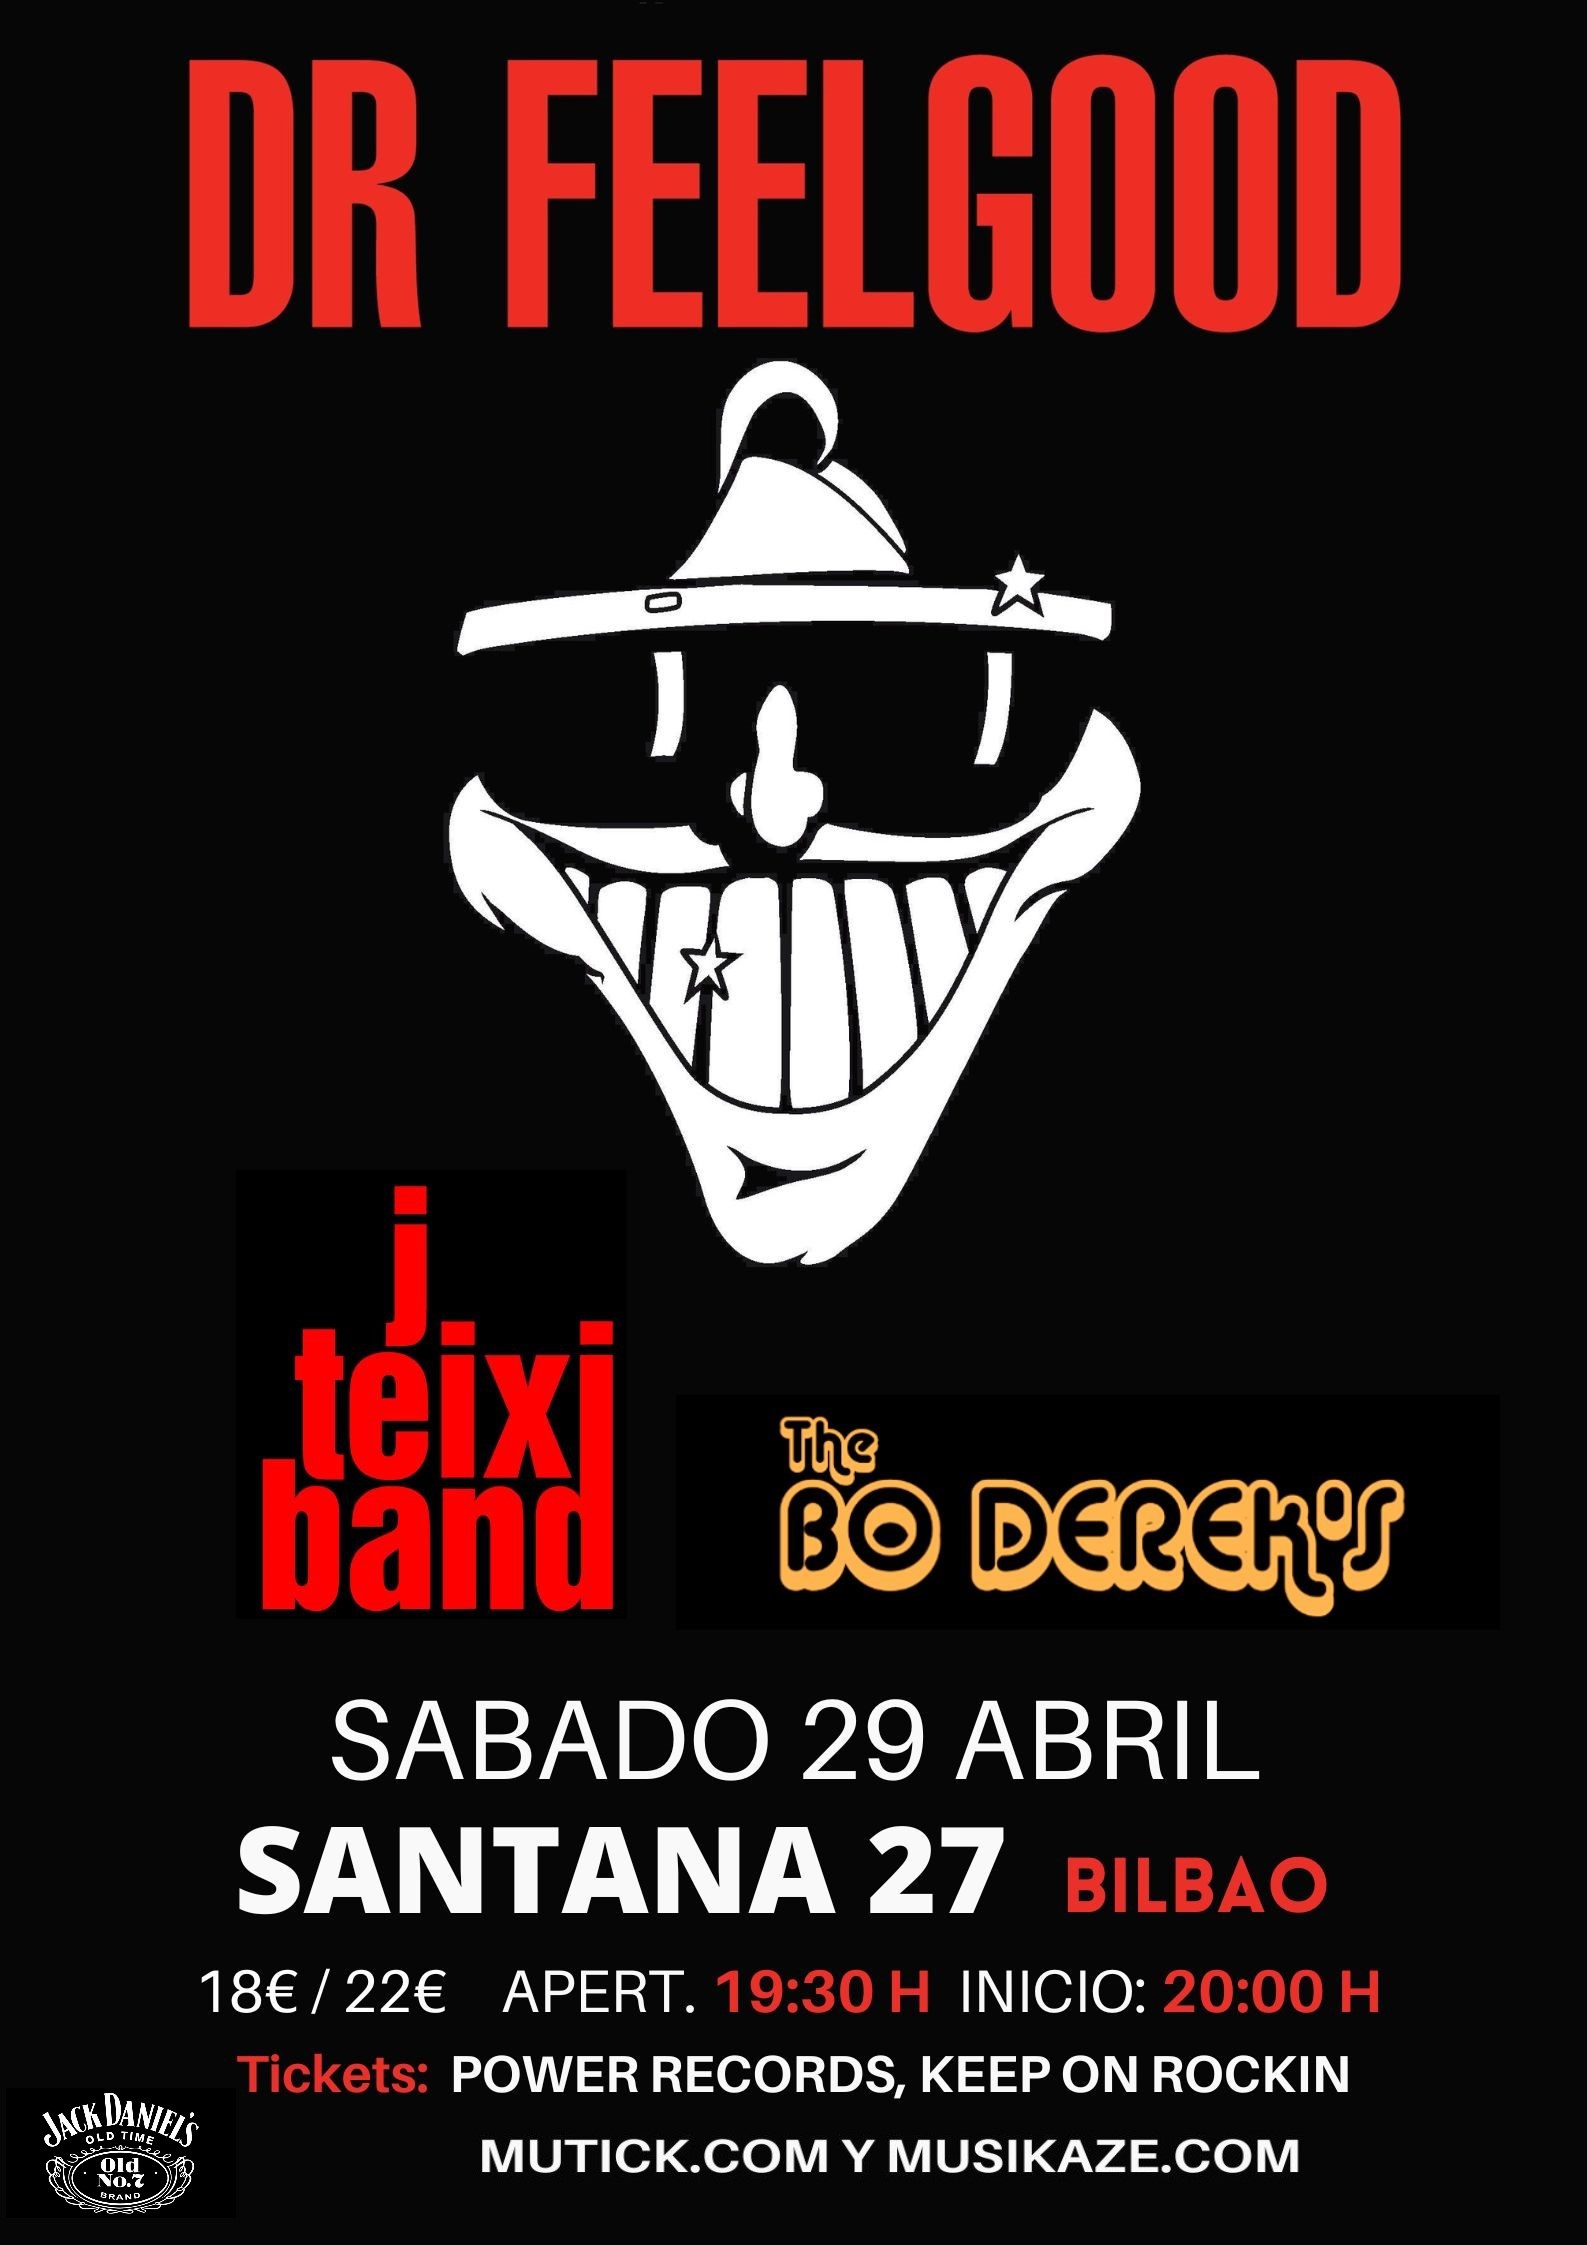 DR FEELGOOD (UK) + J TEIXI BAND + THE BO DEREK´S en Bilbao - Mutick